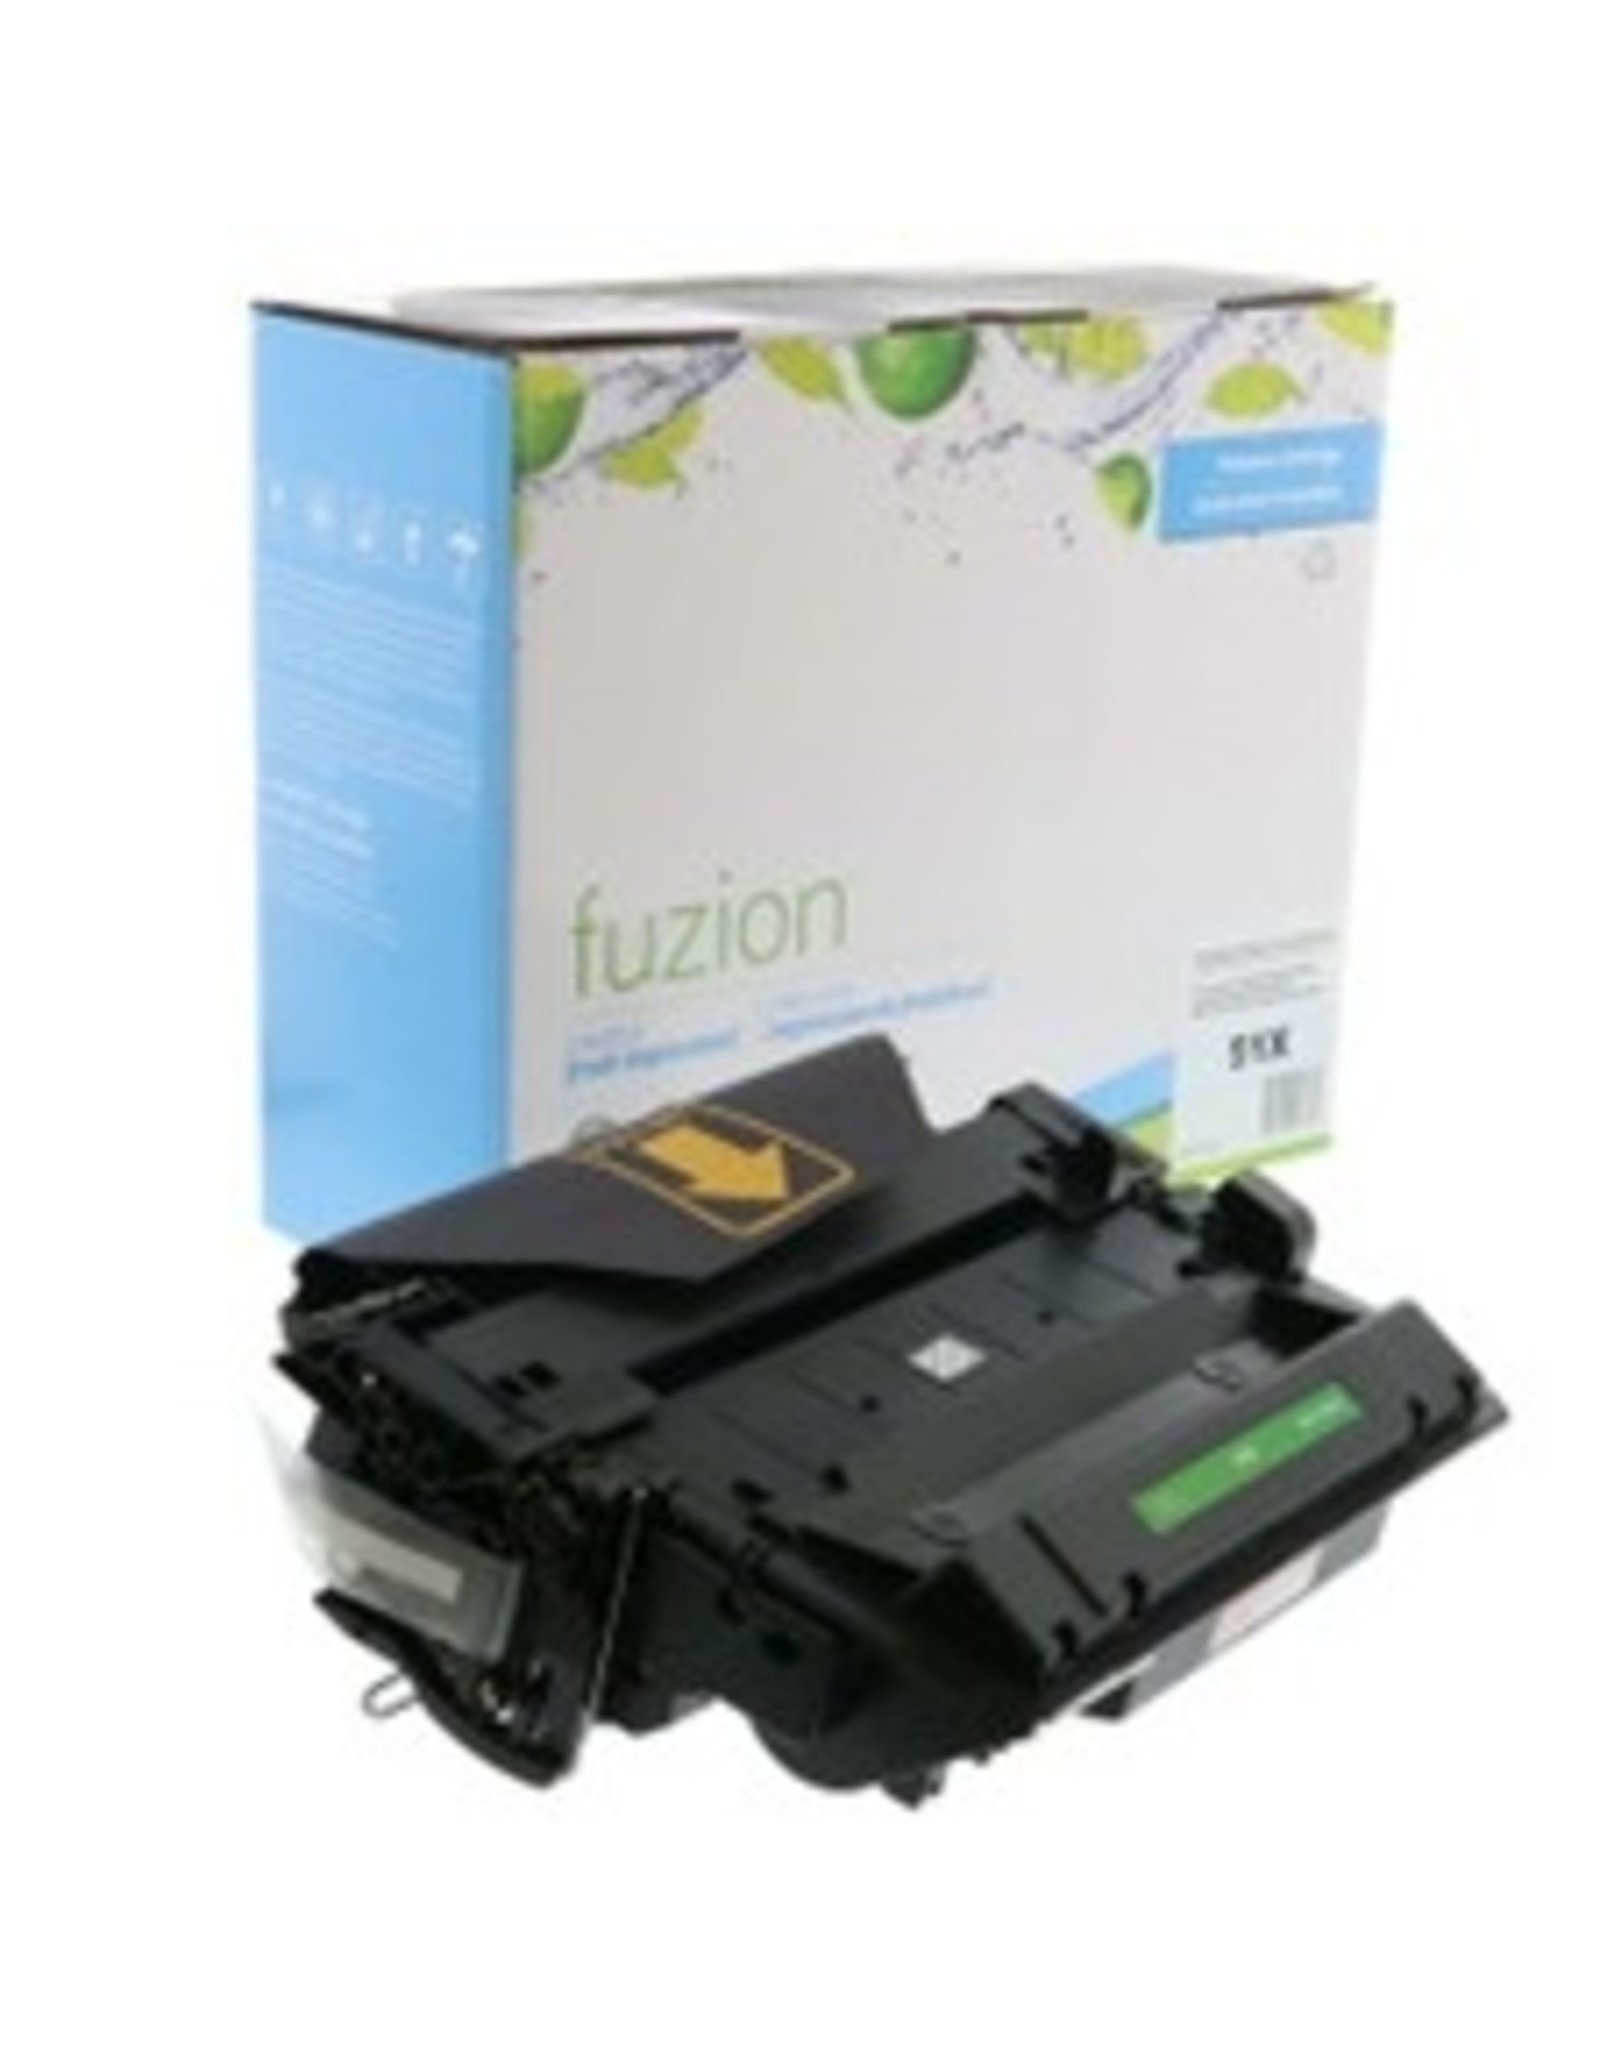 fuzion Toner Cartridge - Alternative for HP 51A - Black